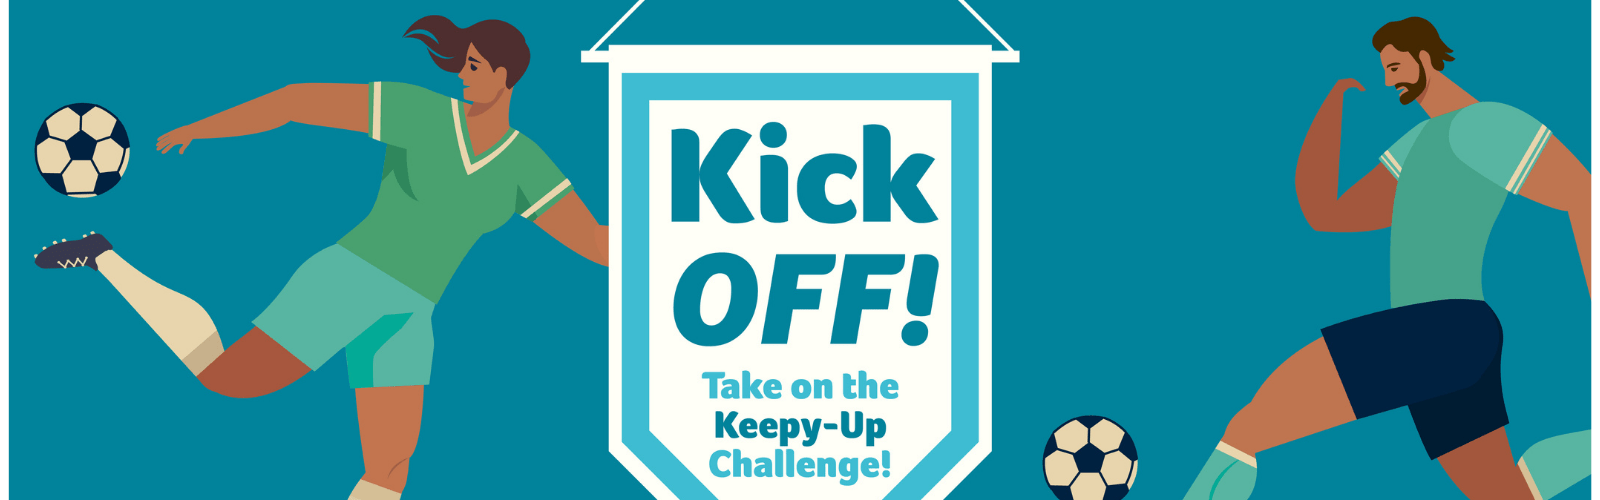 Kick OFF! The Keepy-Up Challenge